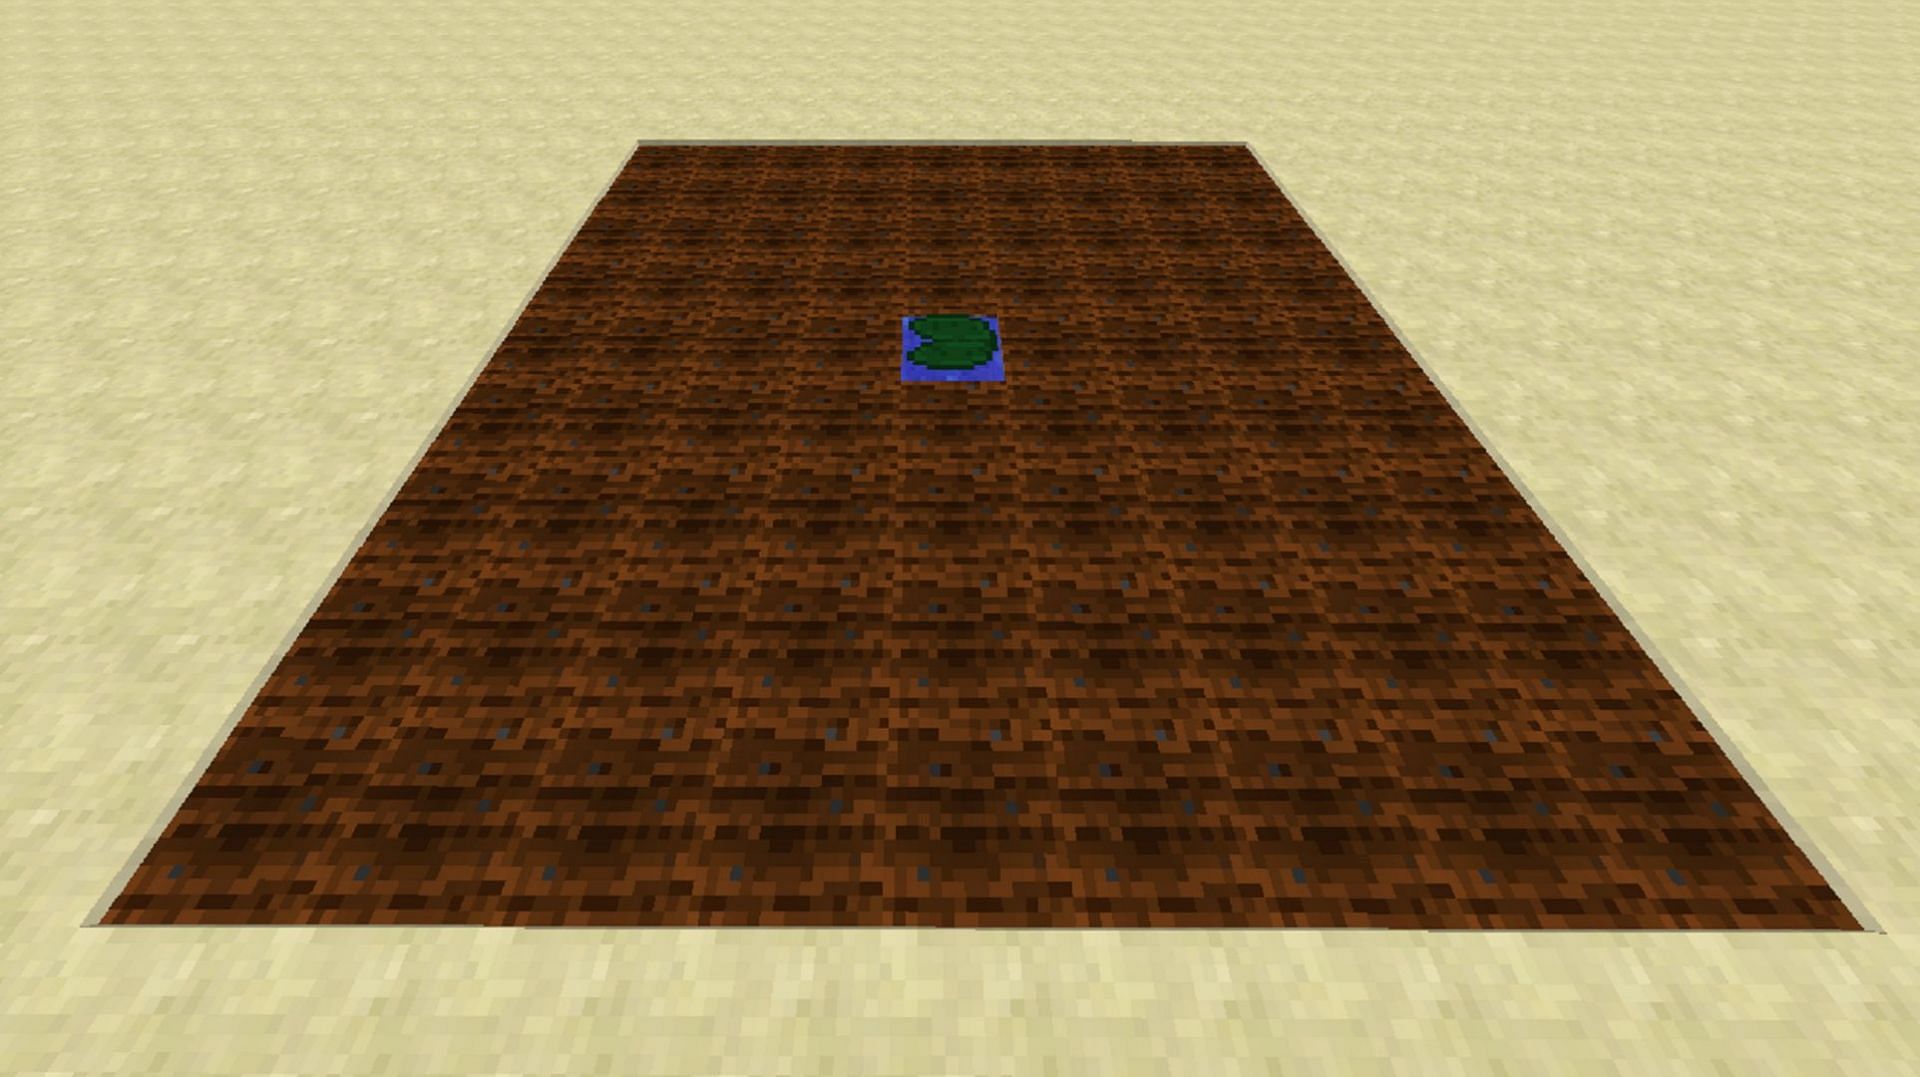 Water saturating farmland blocks has a defined reach (Image via Minecraft Amino)